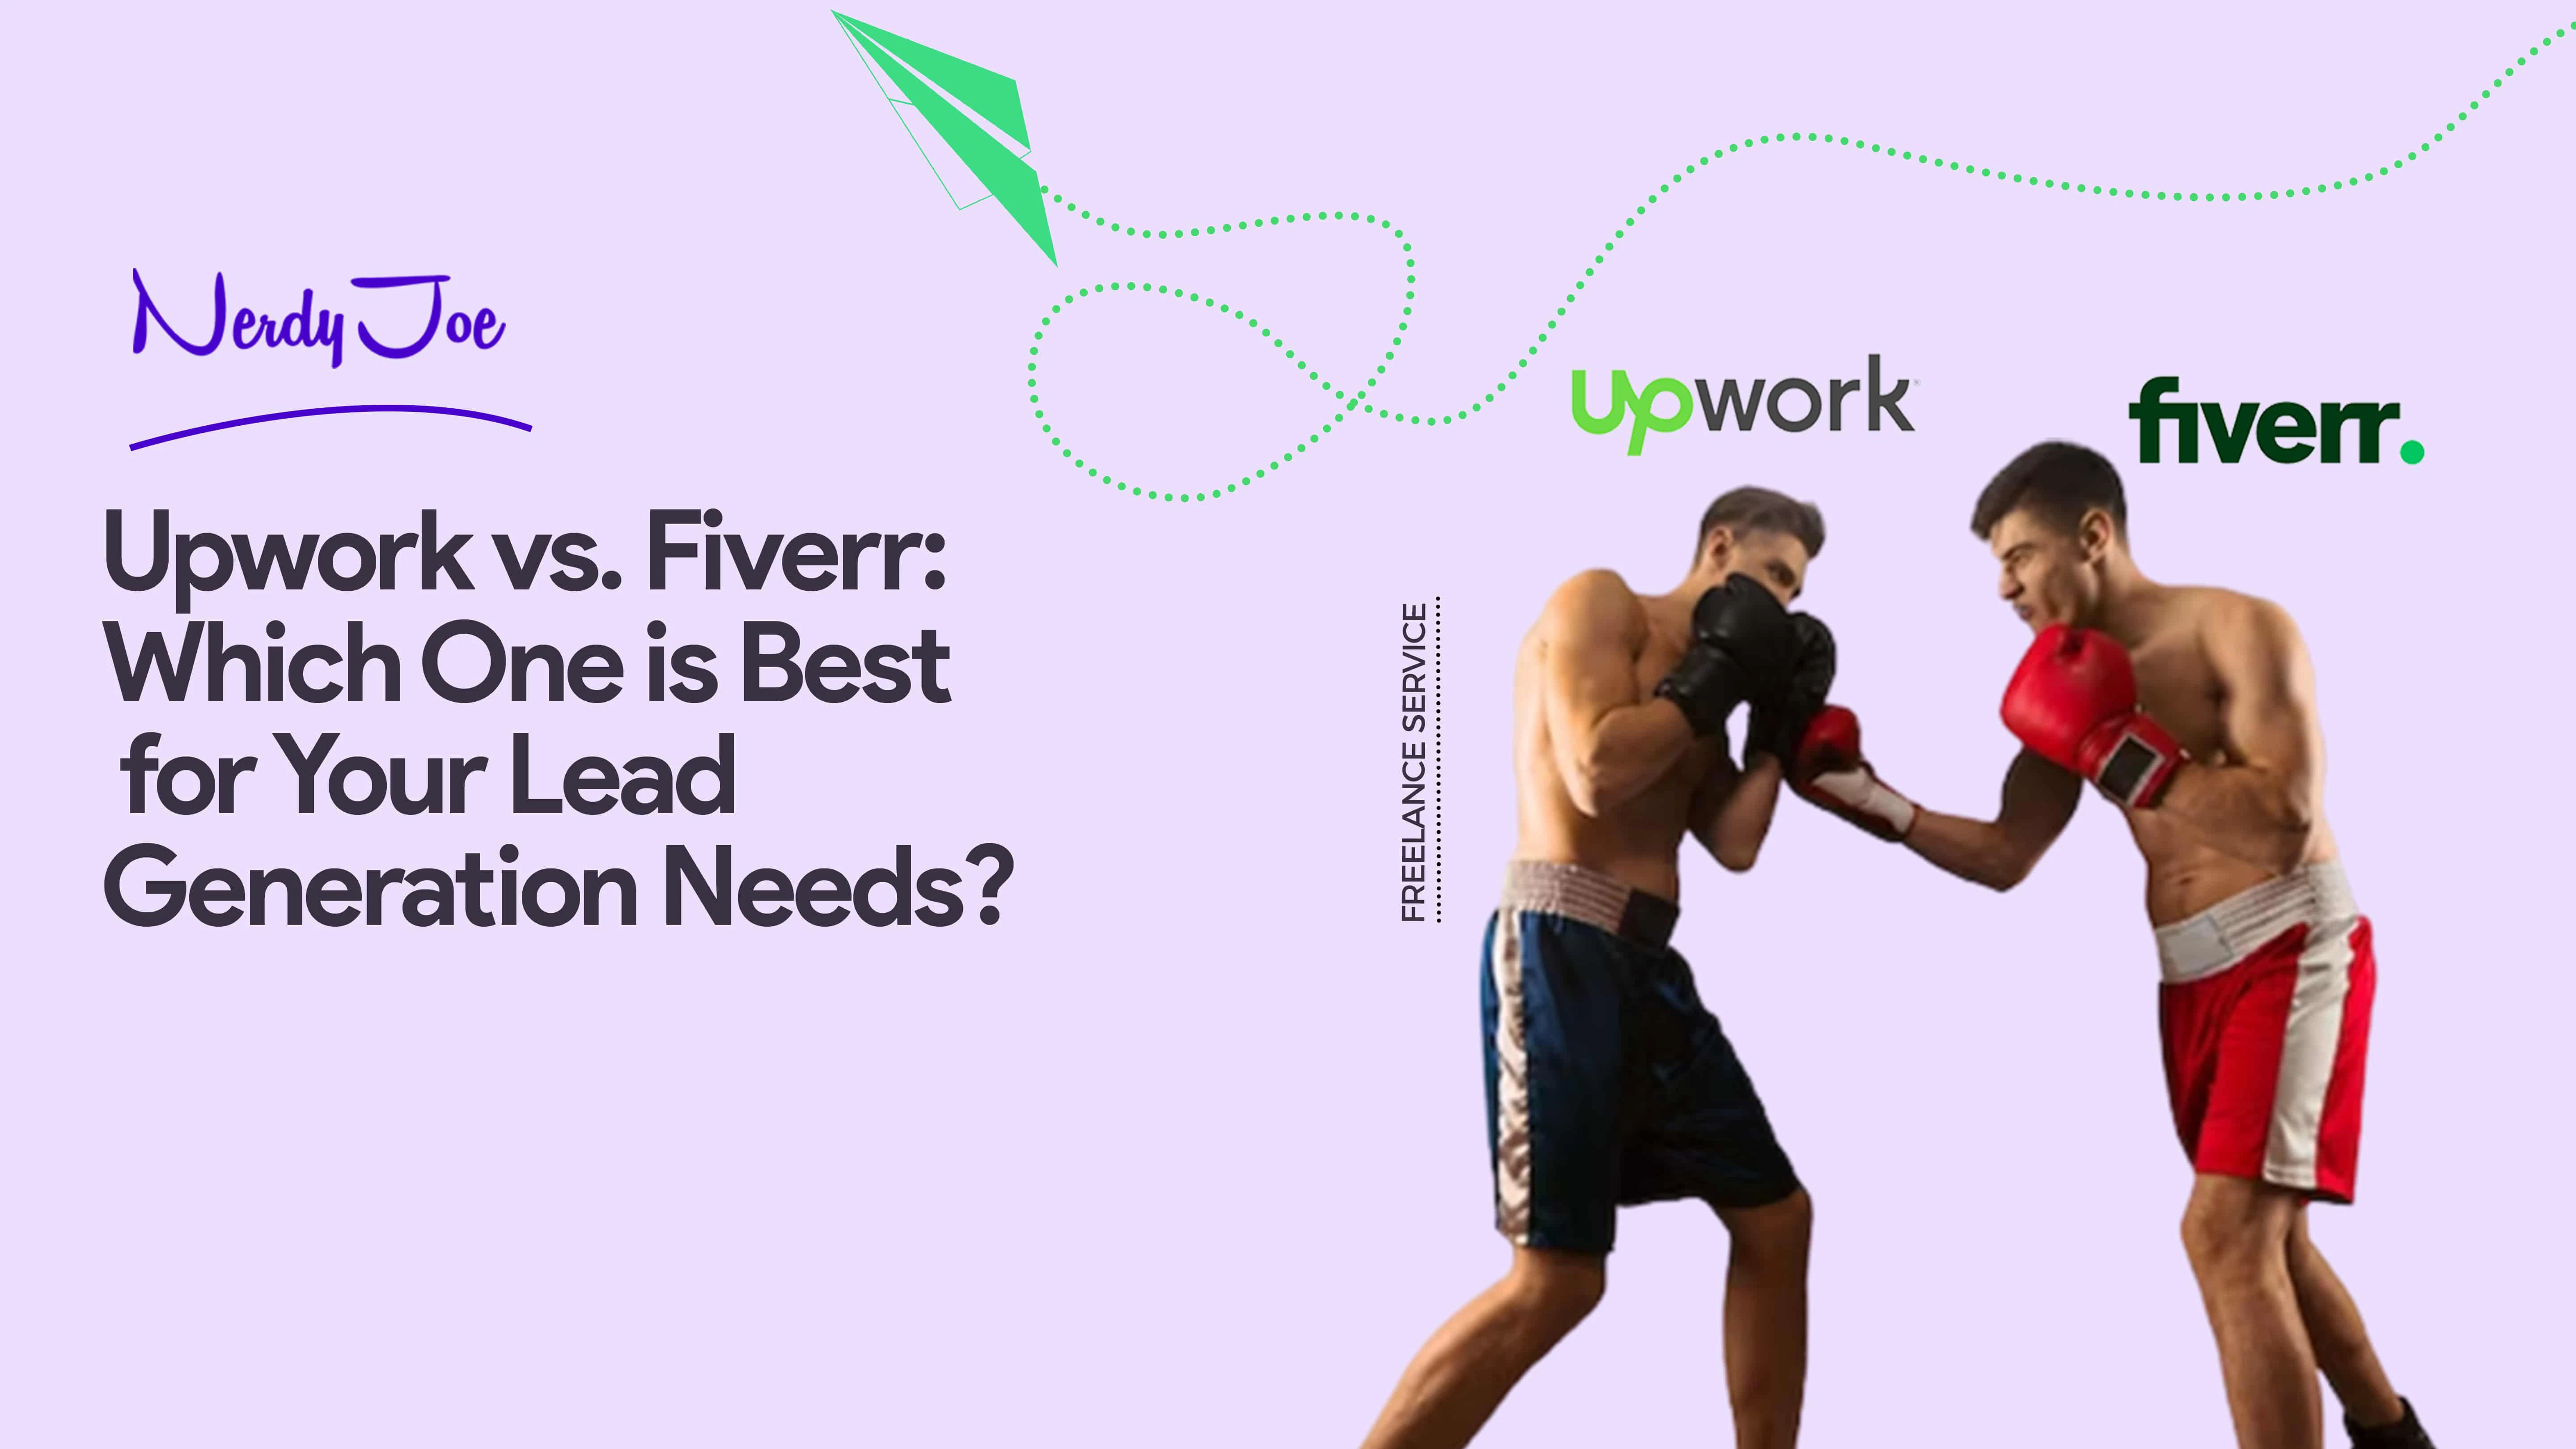 Upwork Vs Fiverr: Which is Best for Your Lead Gen Needs?